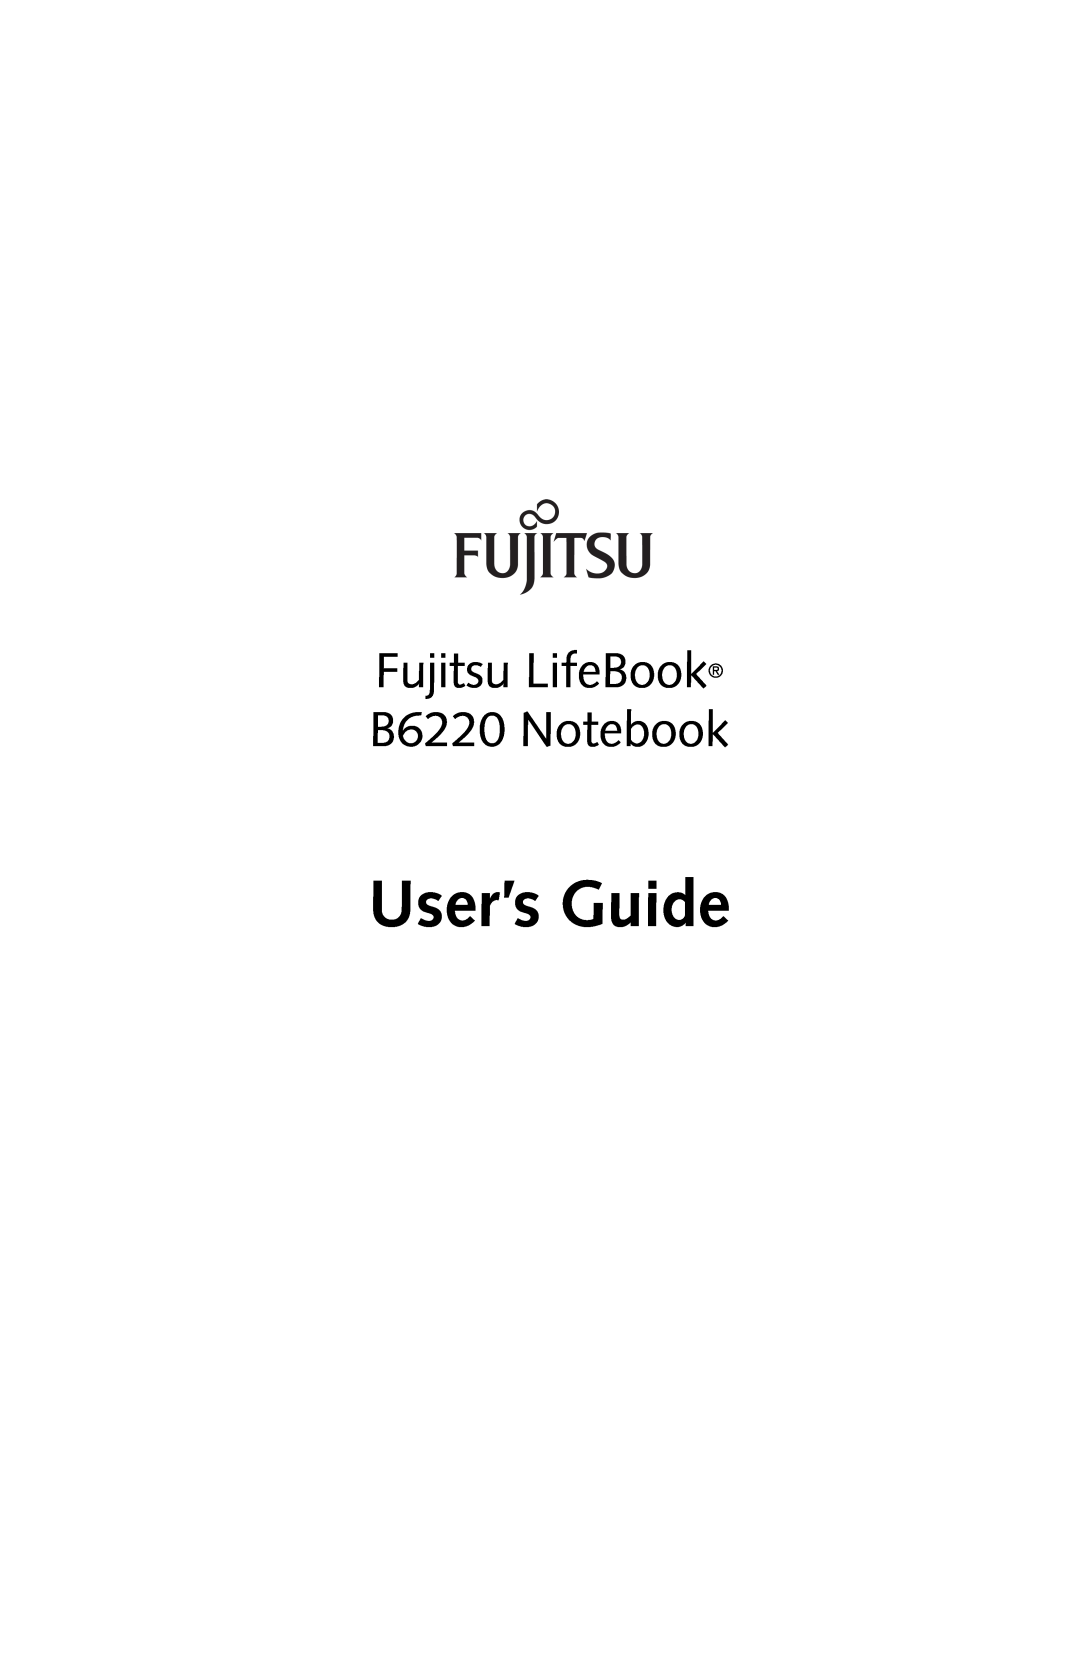 Fujitsu manual User’s Guide, Fujitsu LifeBook B6220 Notebook 